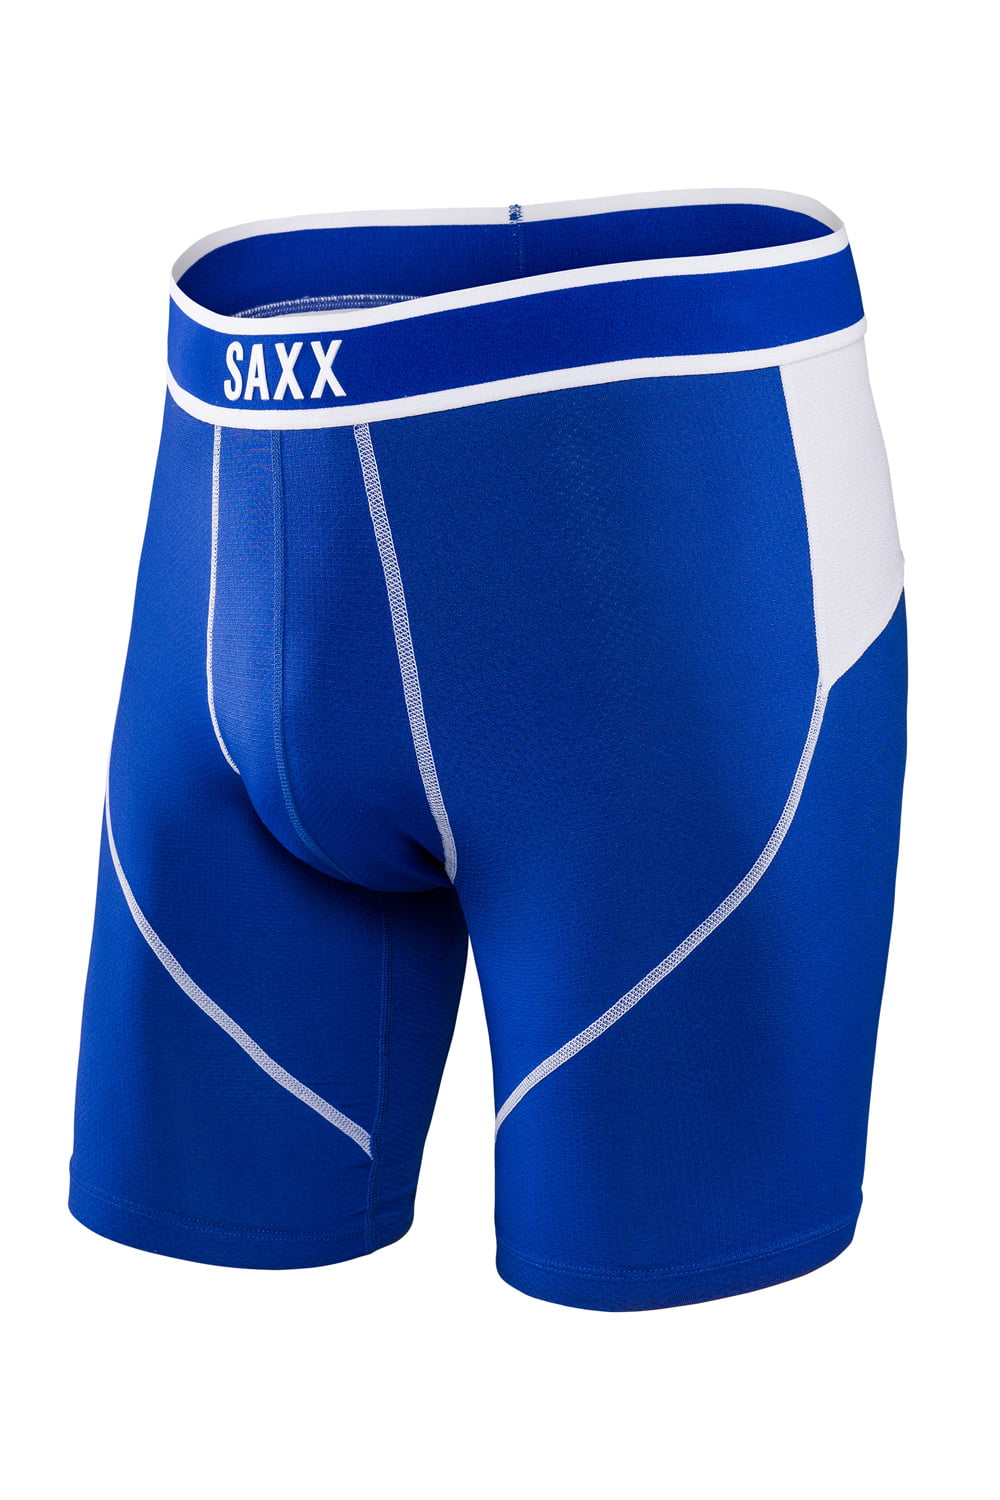 Saxx Underwear Kinetic Long Leg SXLL27 - Walmart.com - Walmart.com